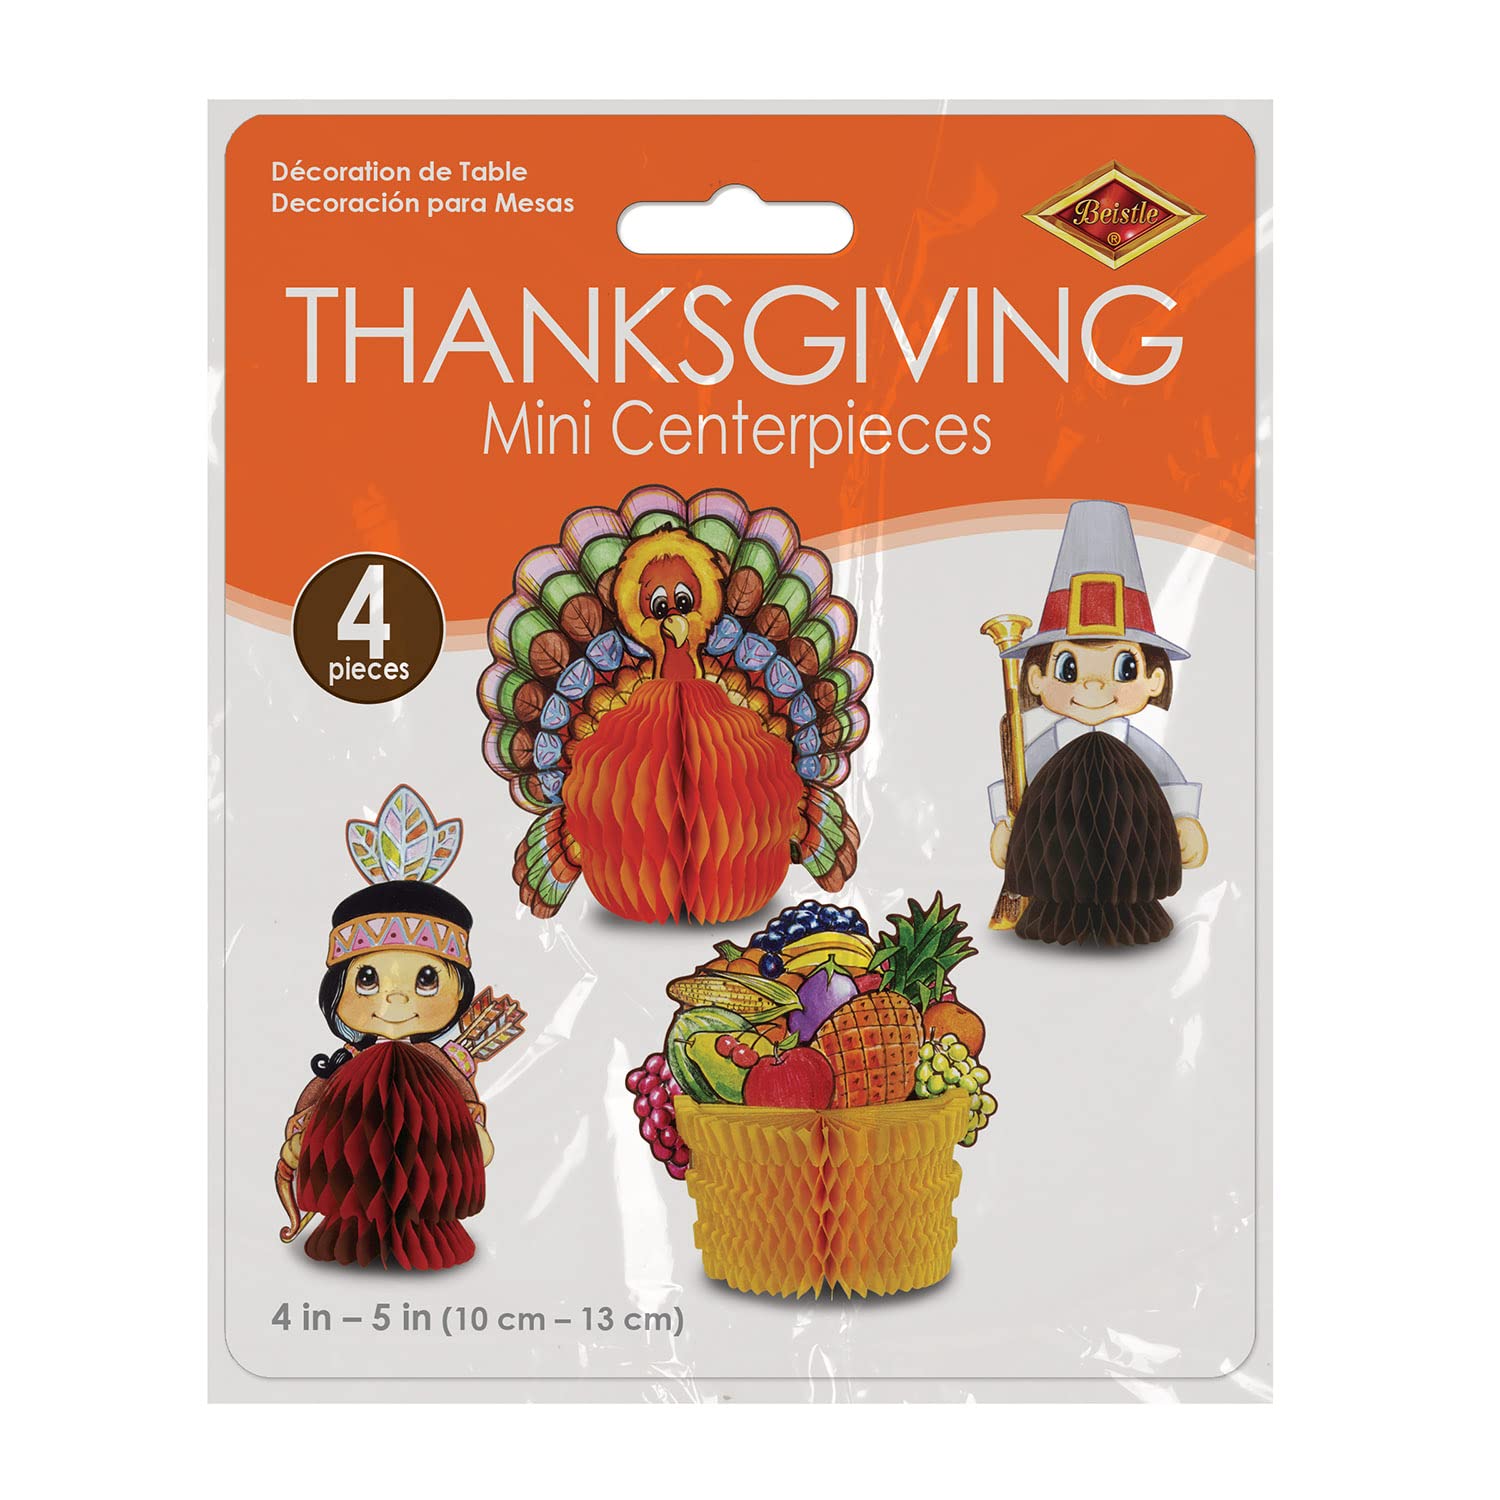 Thanksgiving mini centrepieces